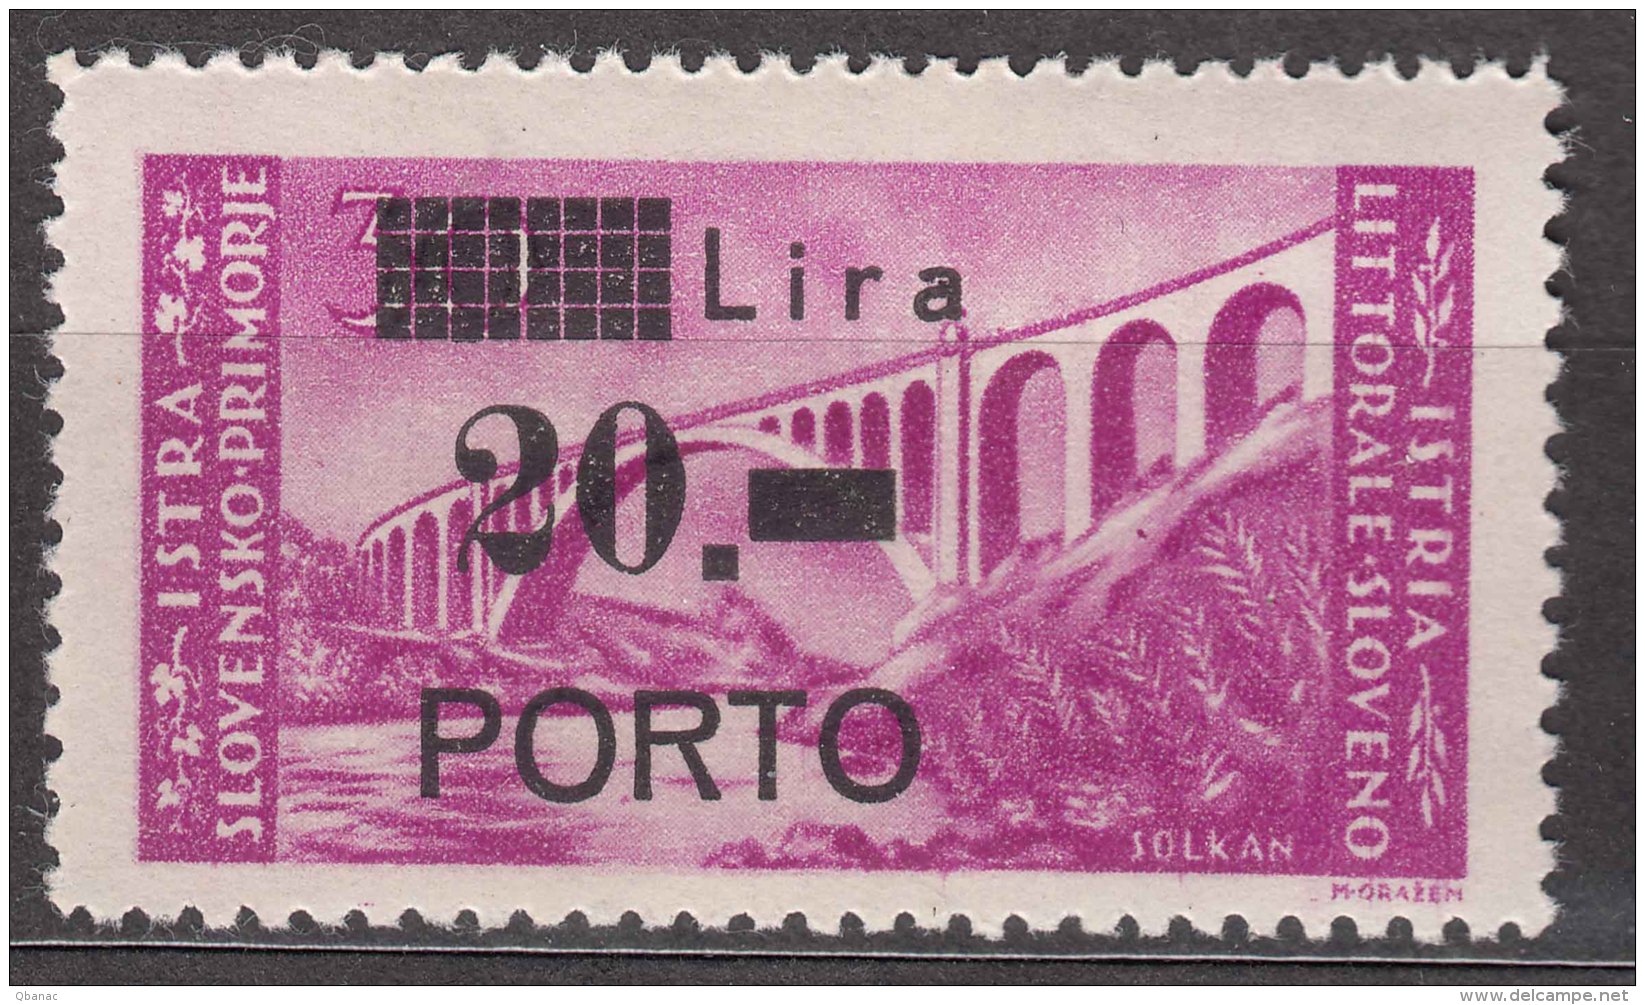 Istria Litorale Yugoslavia Occupation, Porto 1946 Sassone#12 Mint Never Hinged - Occup. Iugoslava: Istria